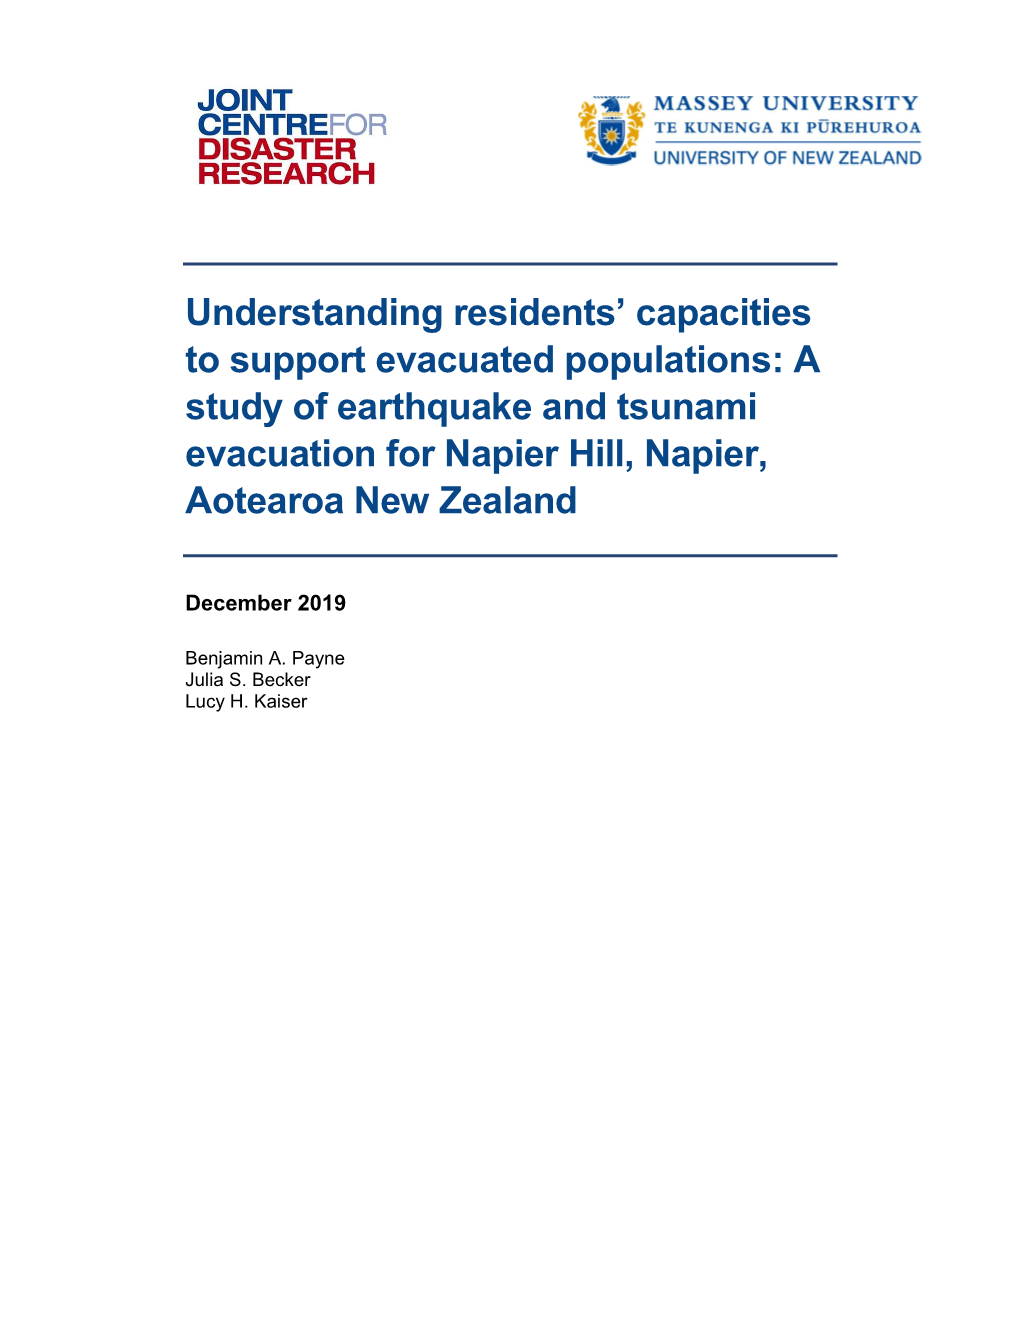 A Study of Earthquake and Tsunami Evacuation for Napier Hill, Napier, Aotearoa New Zealand